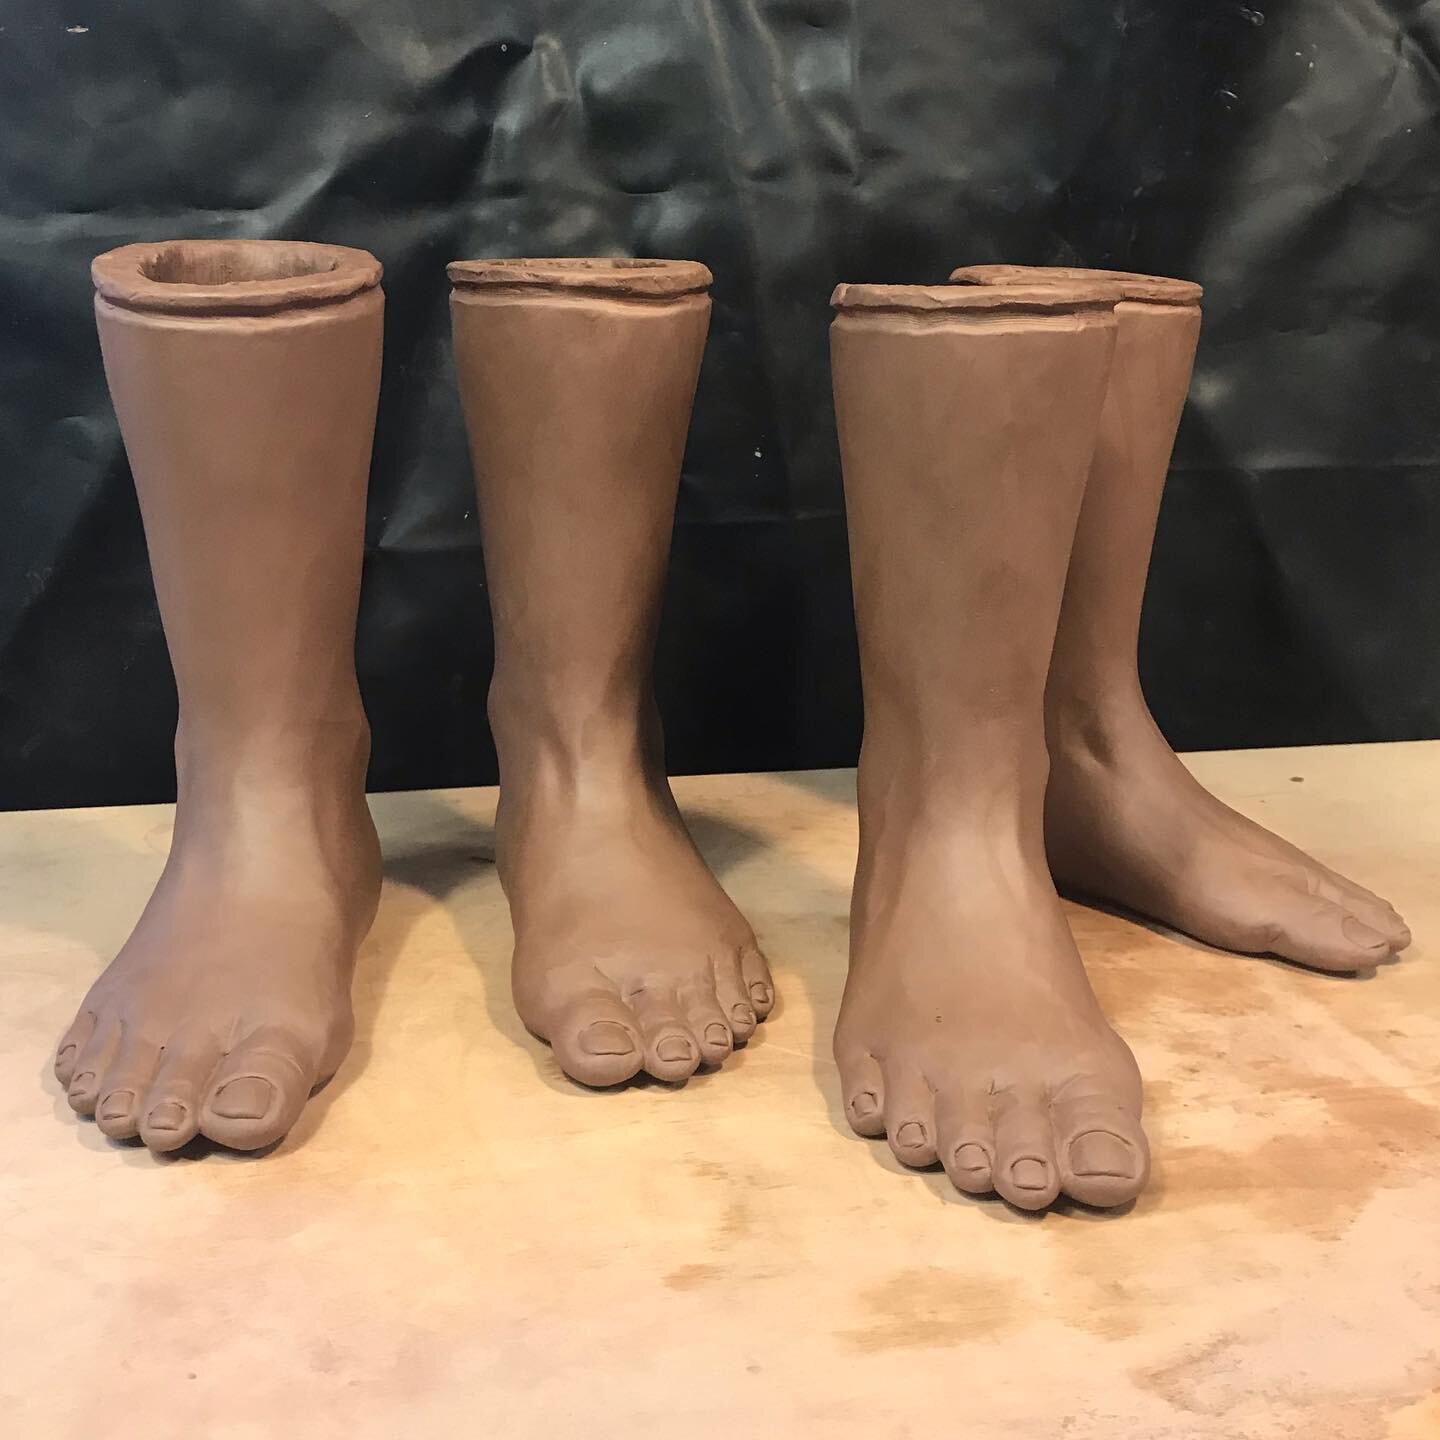 #wip #feet #sculpture #earthenware